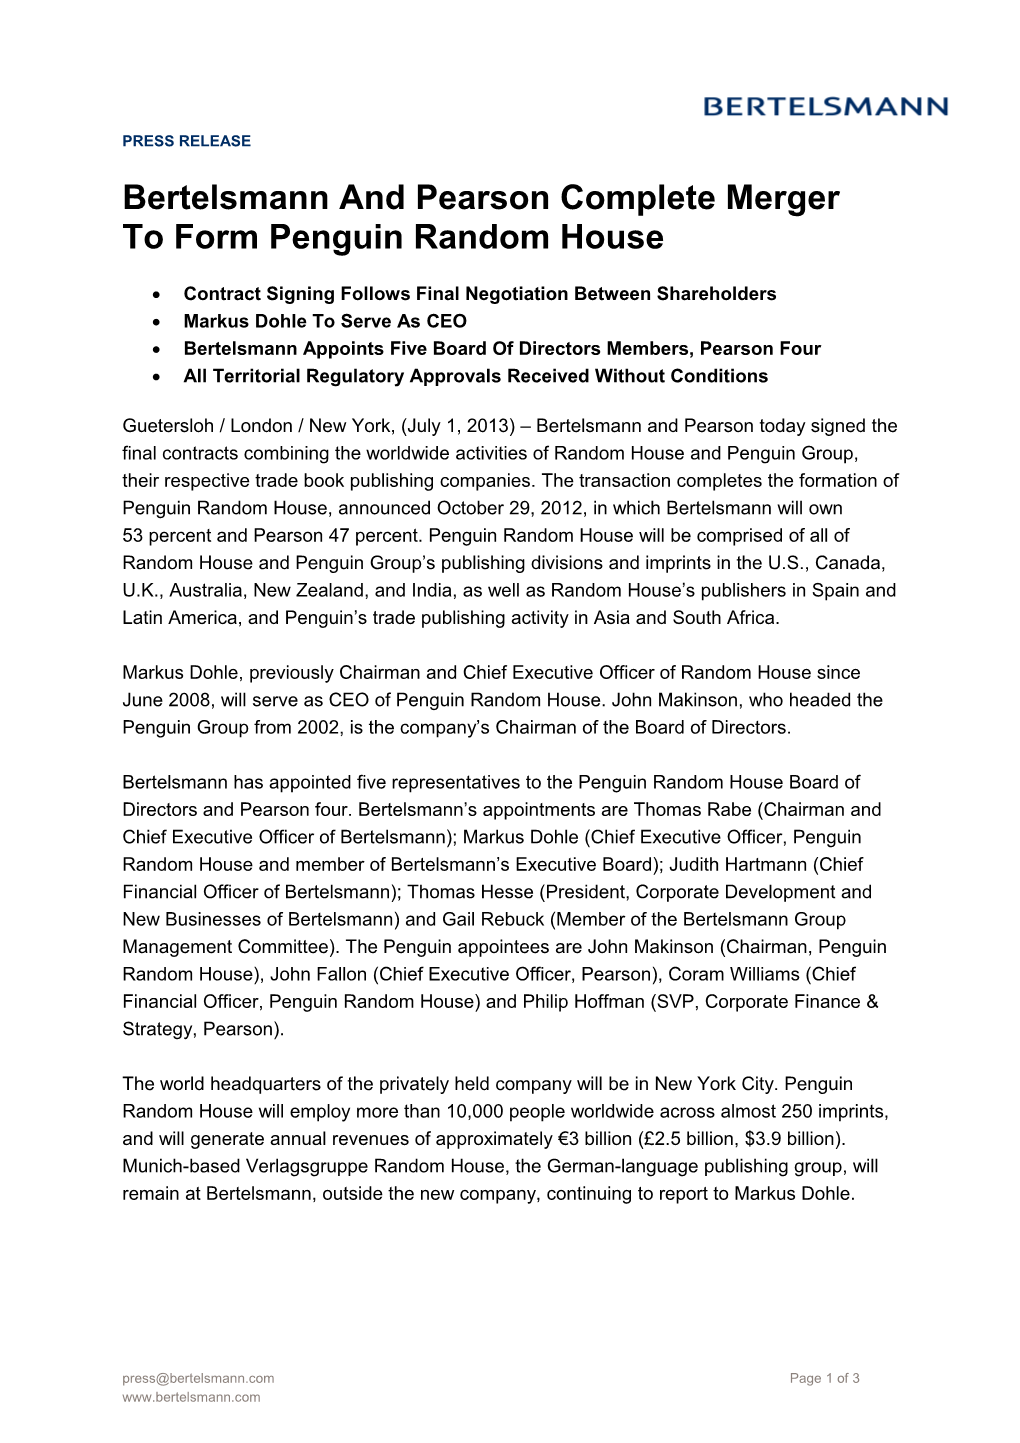 Bertelsmann and Pearson Complete Merger to Form Penguin Random House